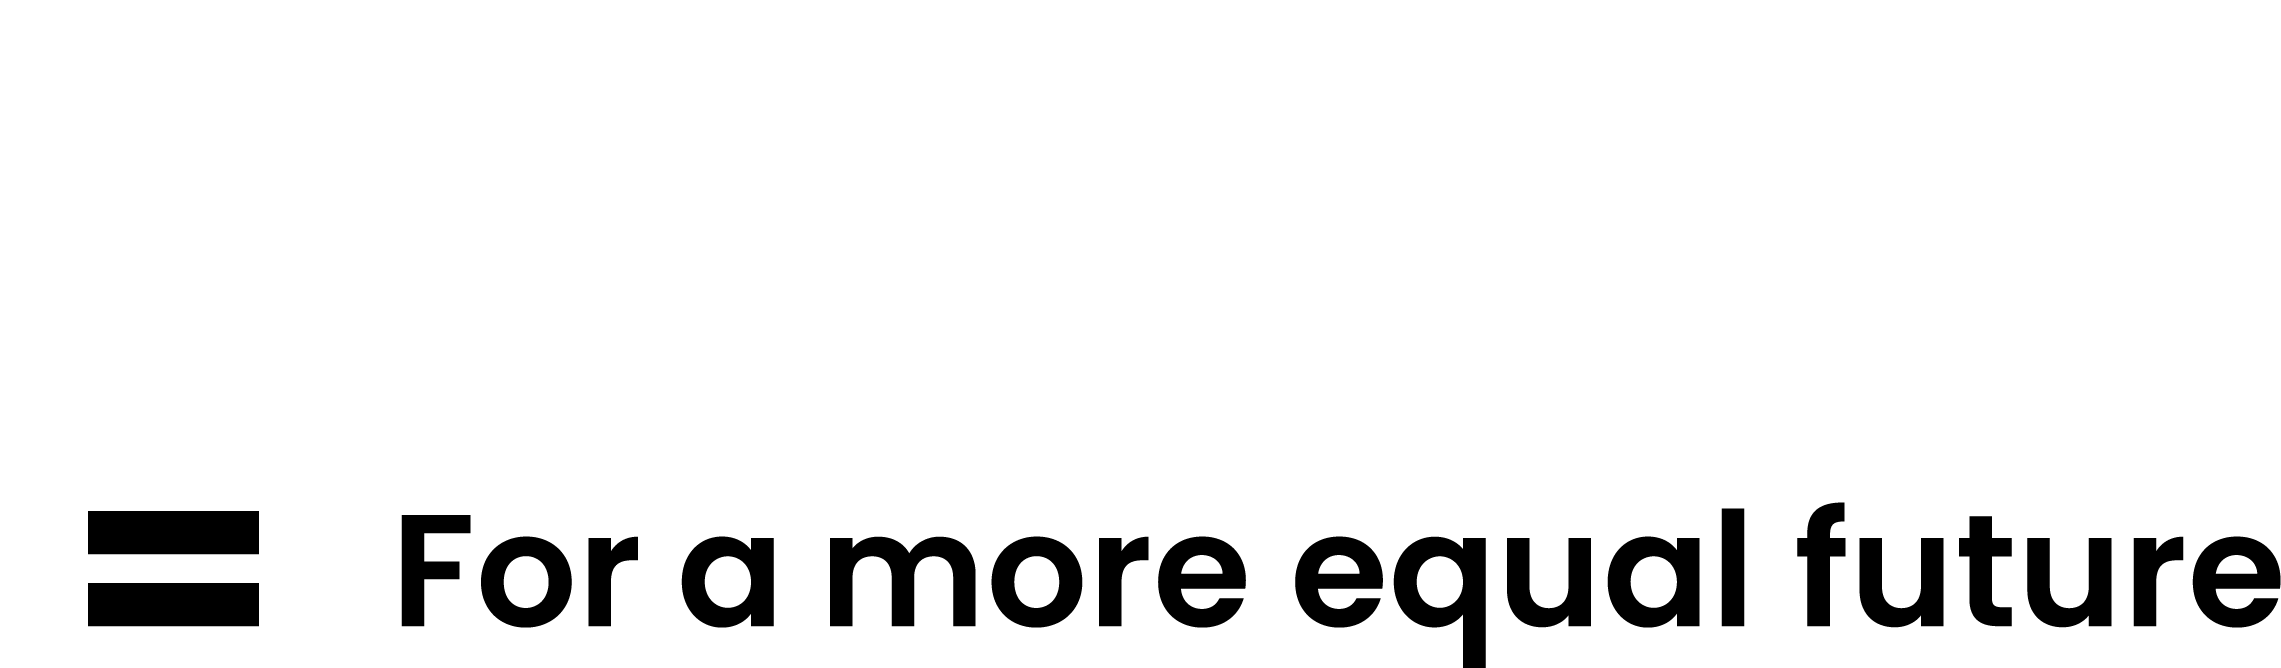 islington-logo